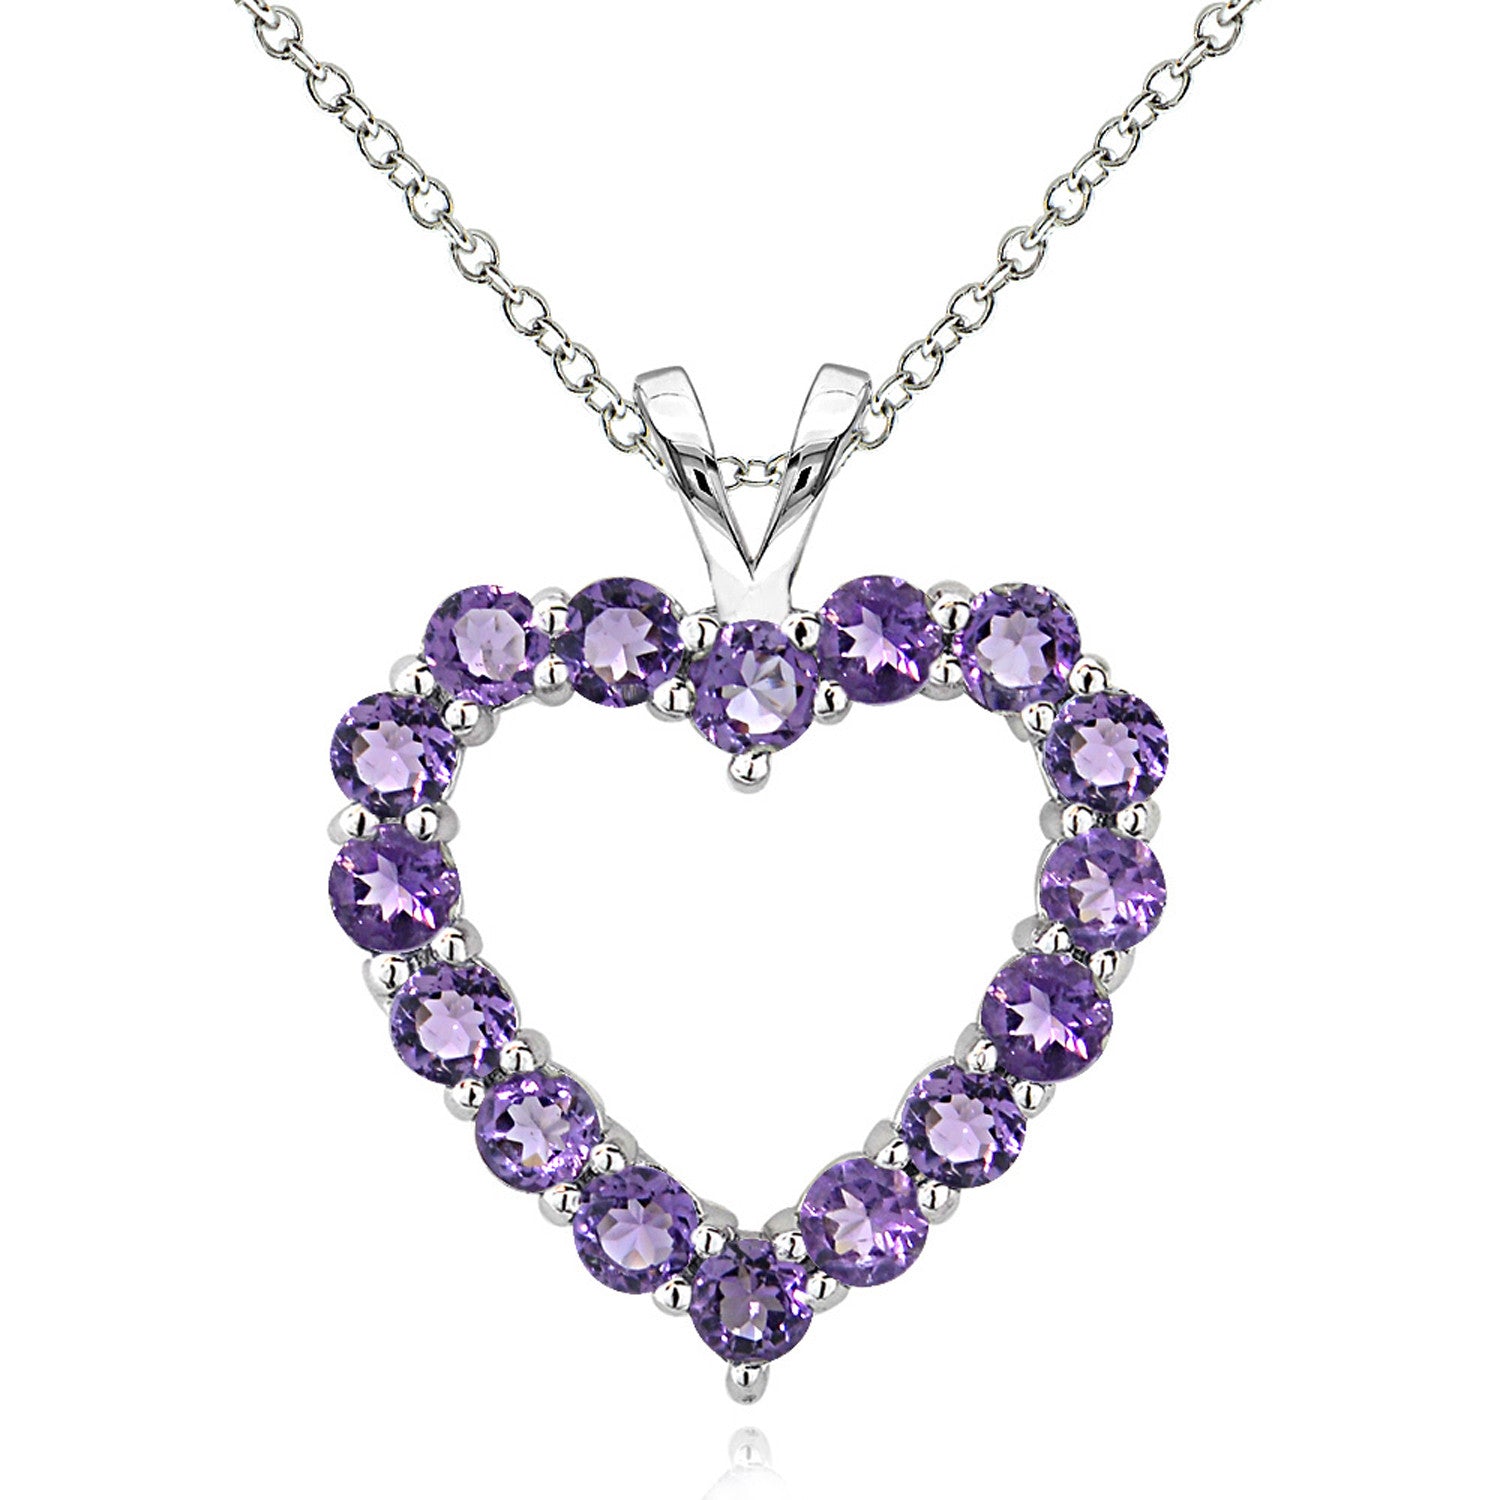 Open Heart Birthstone Necklace in Sterling Silver - February Amethyst